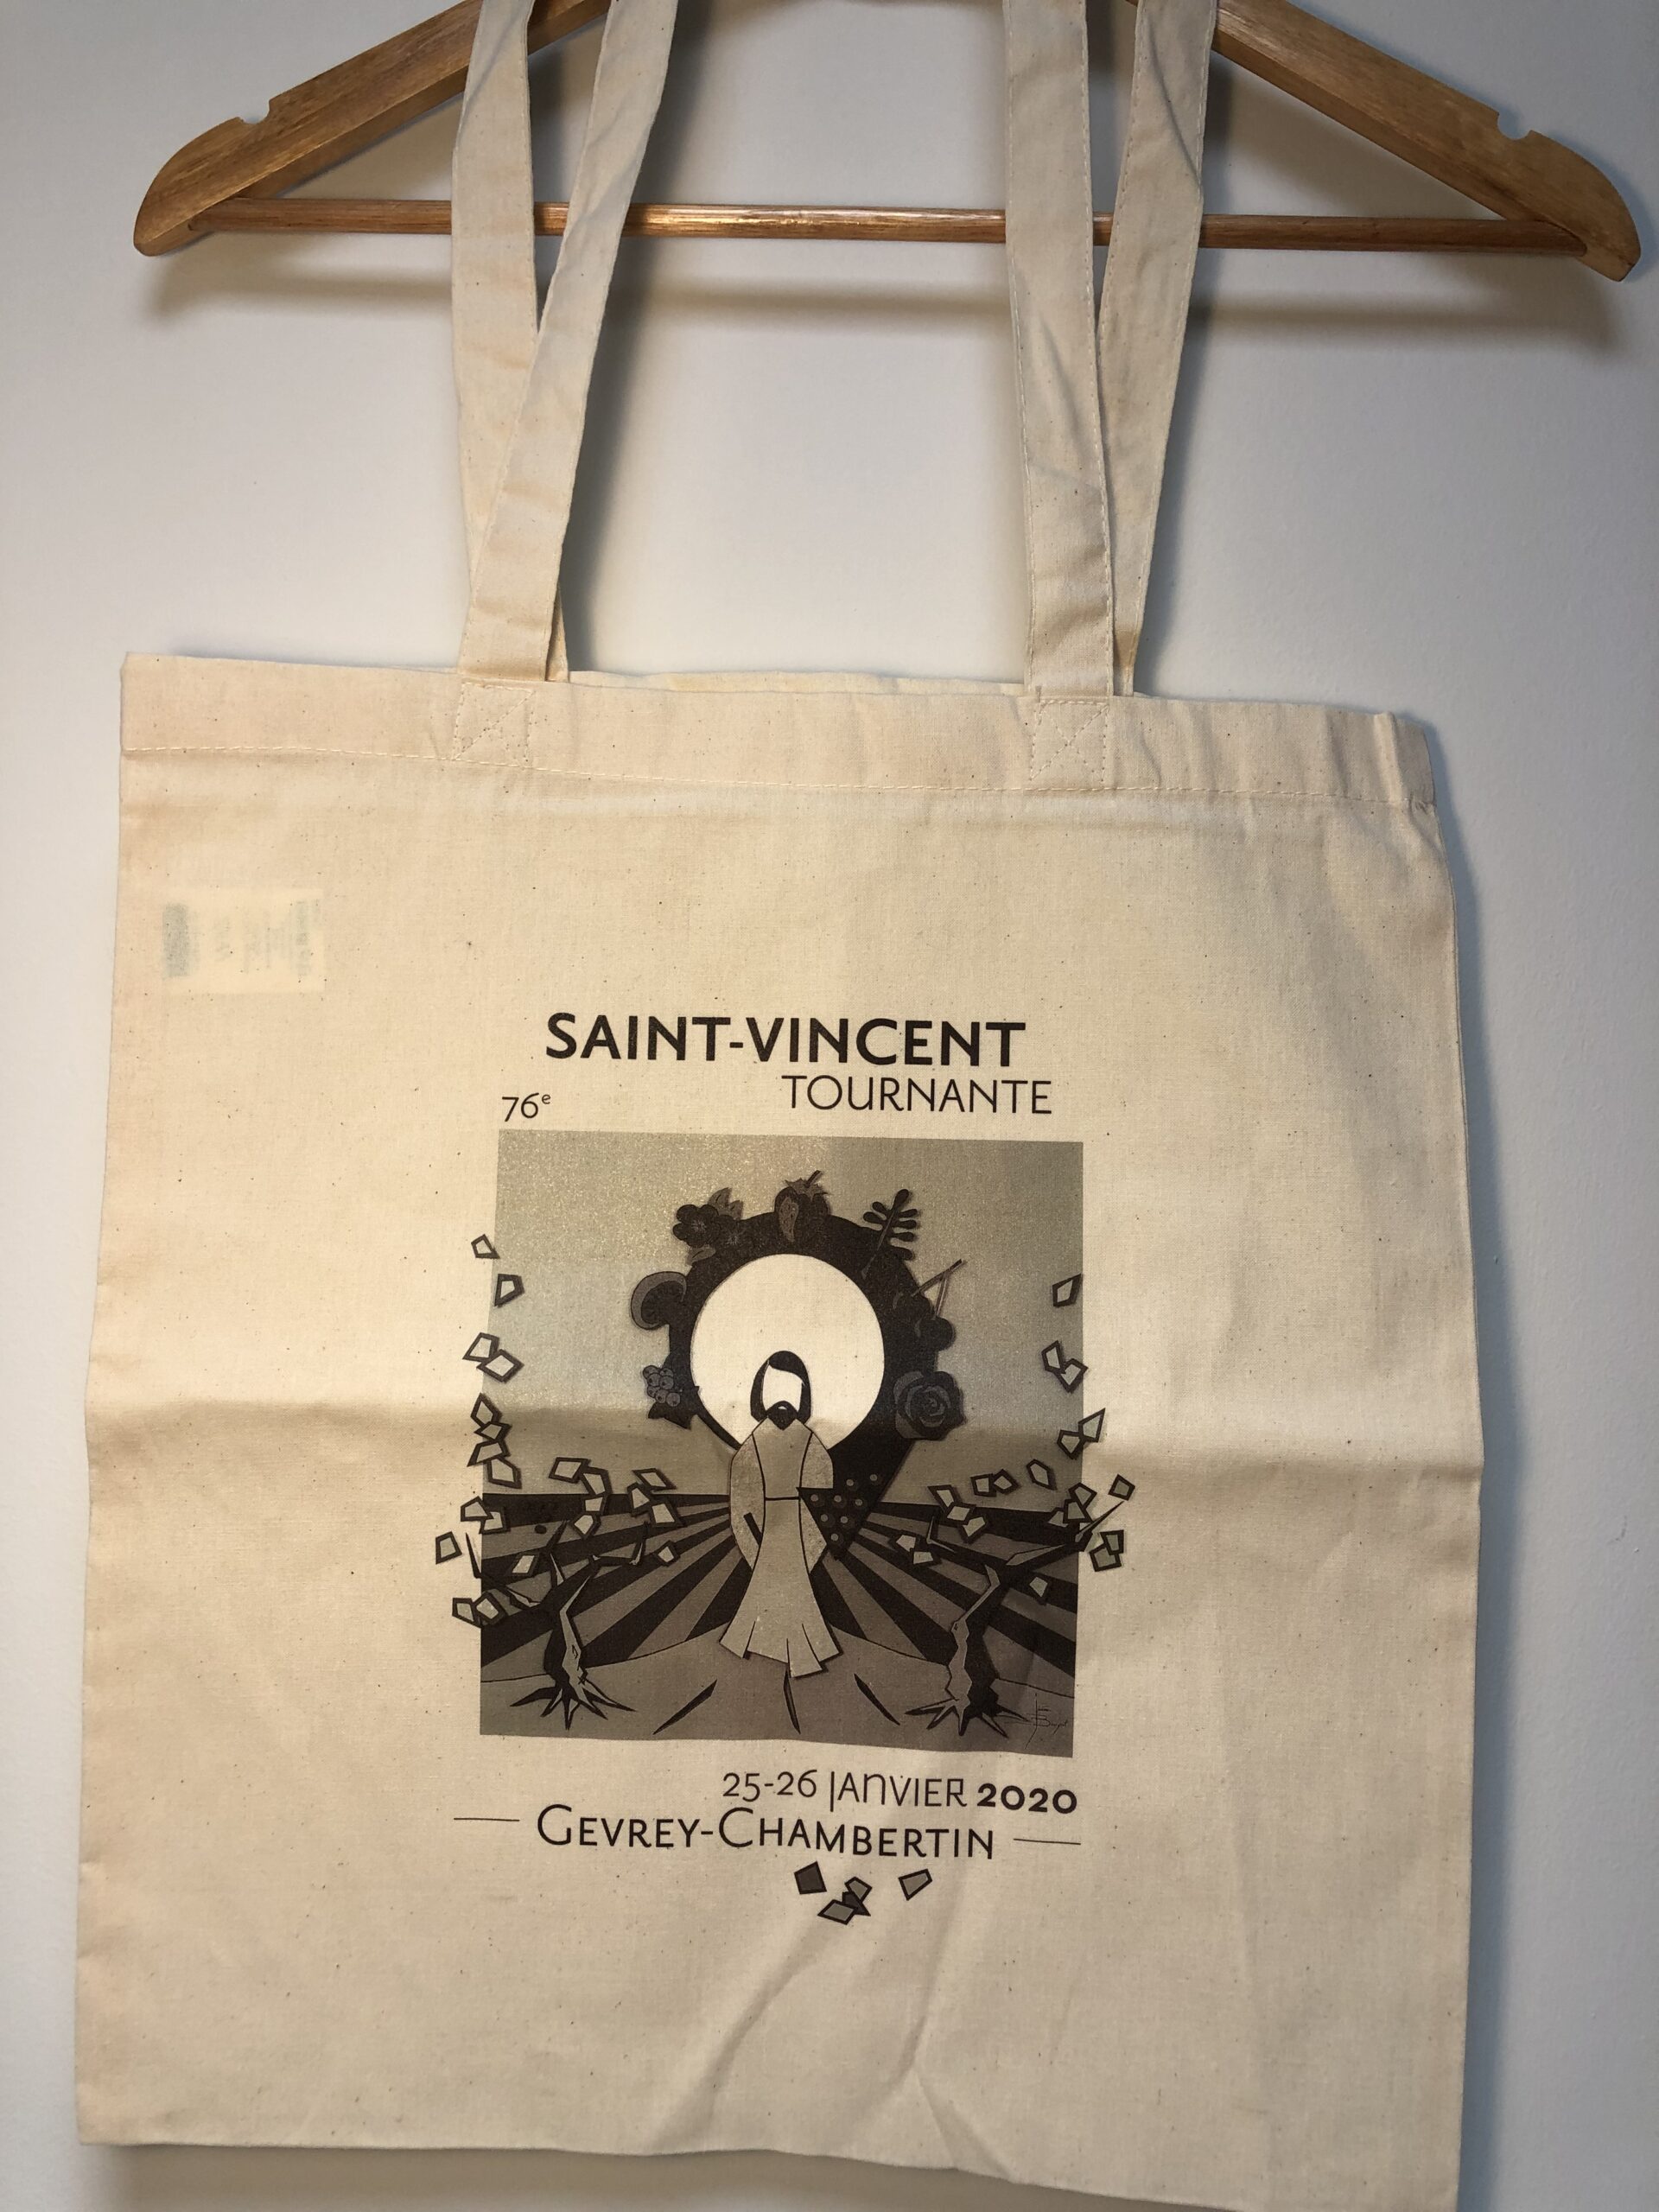 Tote bag Saint-Vincent Tournante 2020 Gevrey-Chambertin